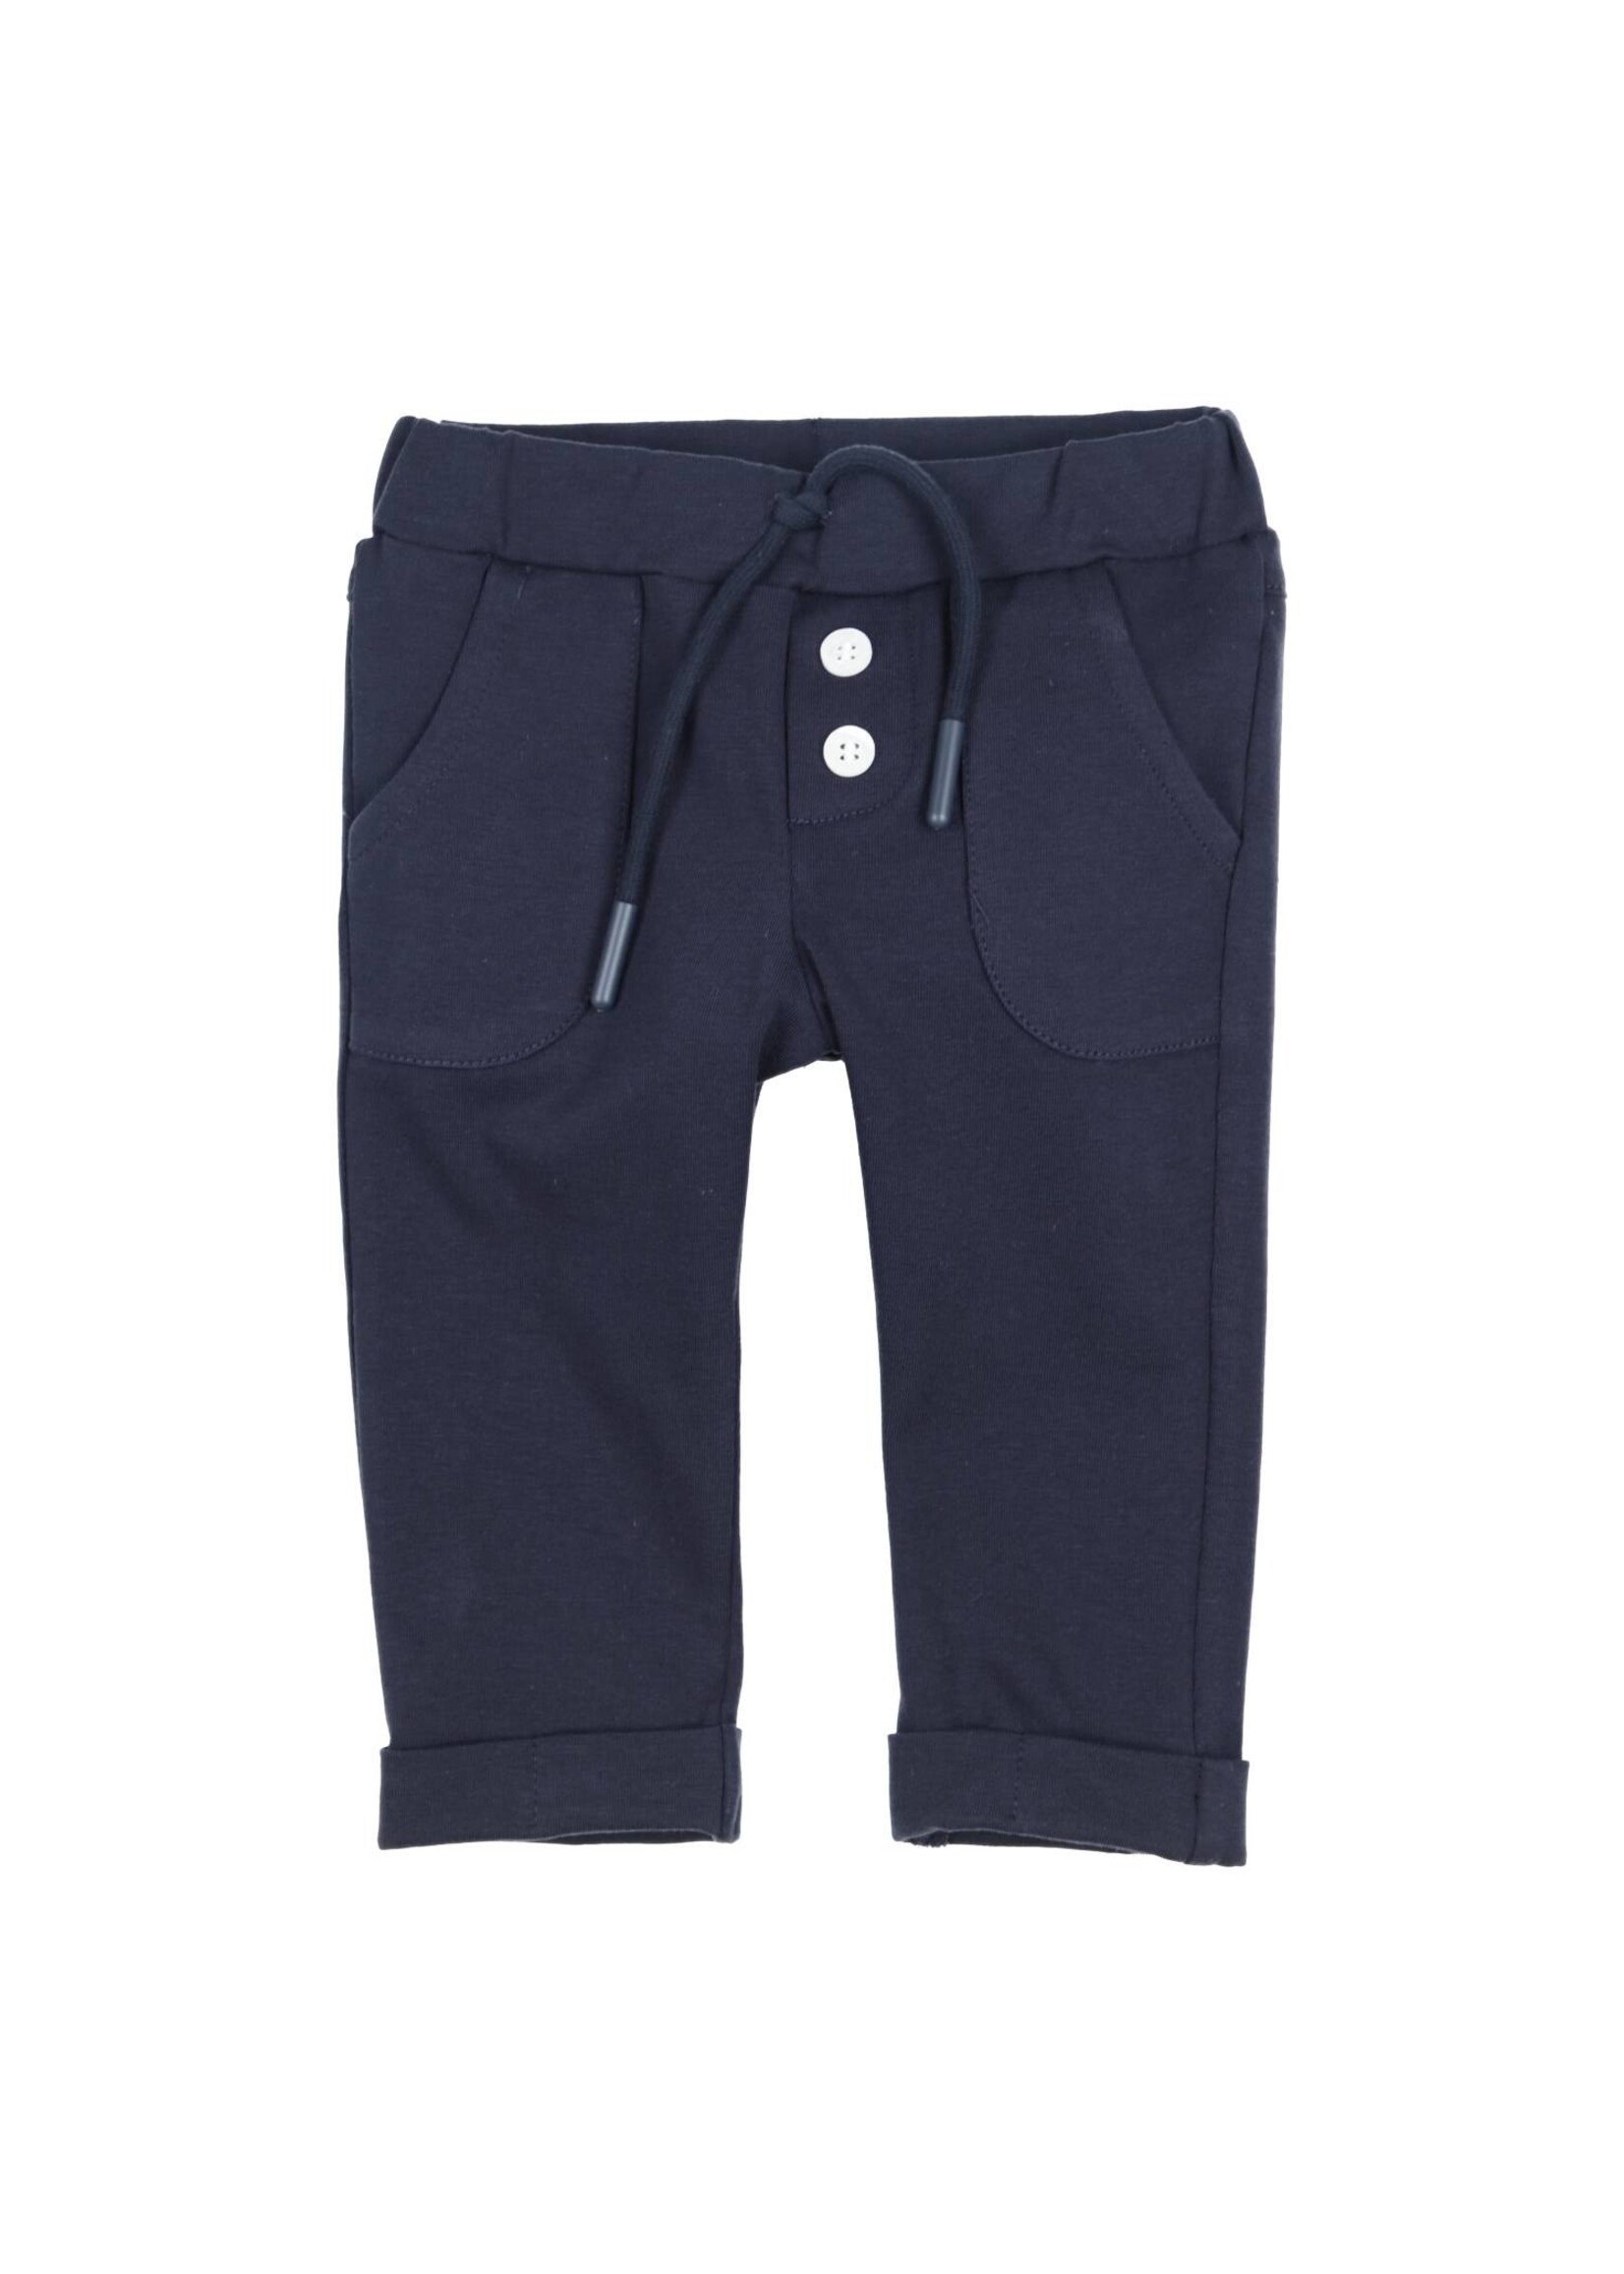 Gymp Boys Trousers Aerobic 410-4140-20 Navy